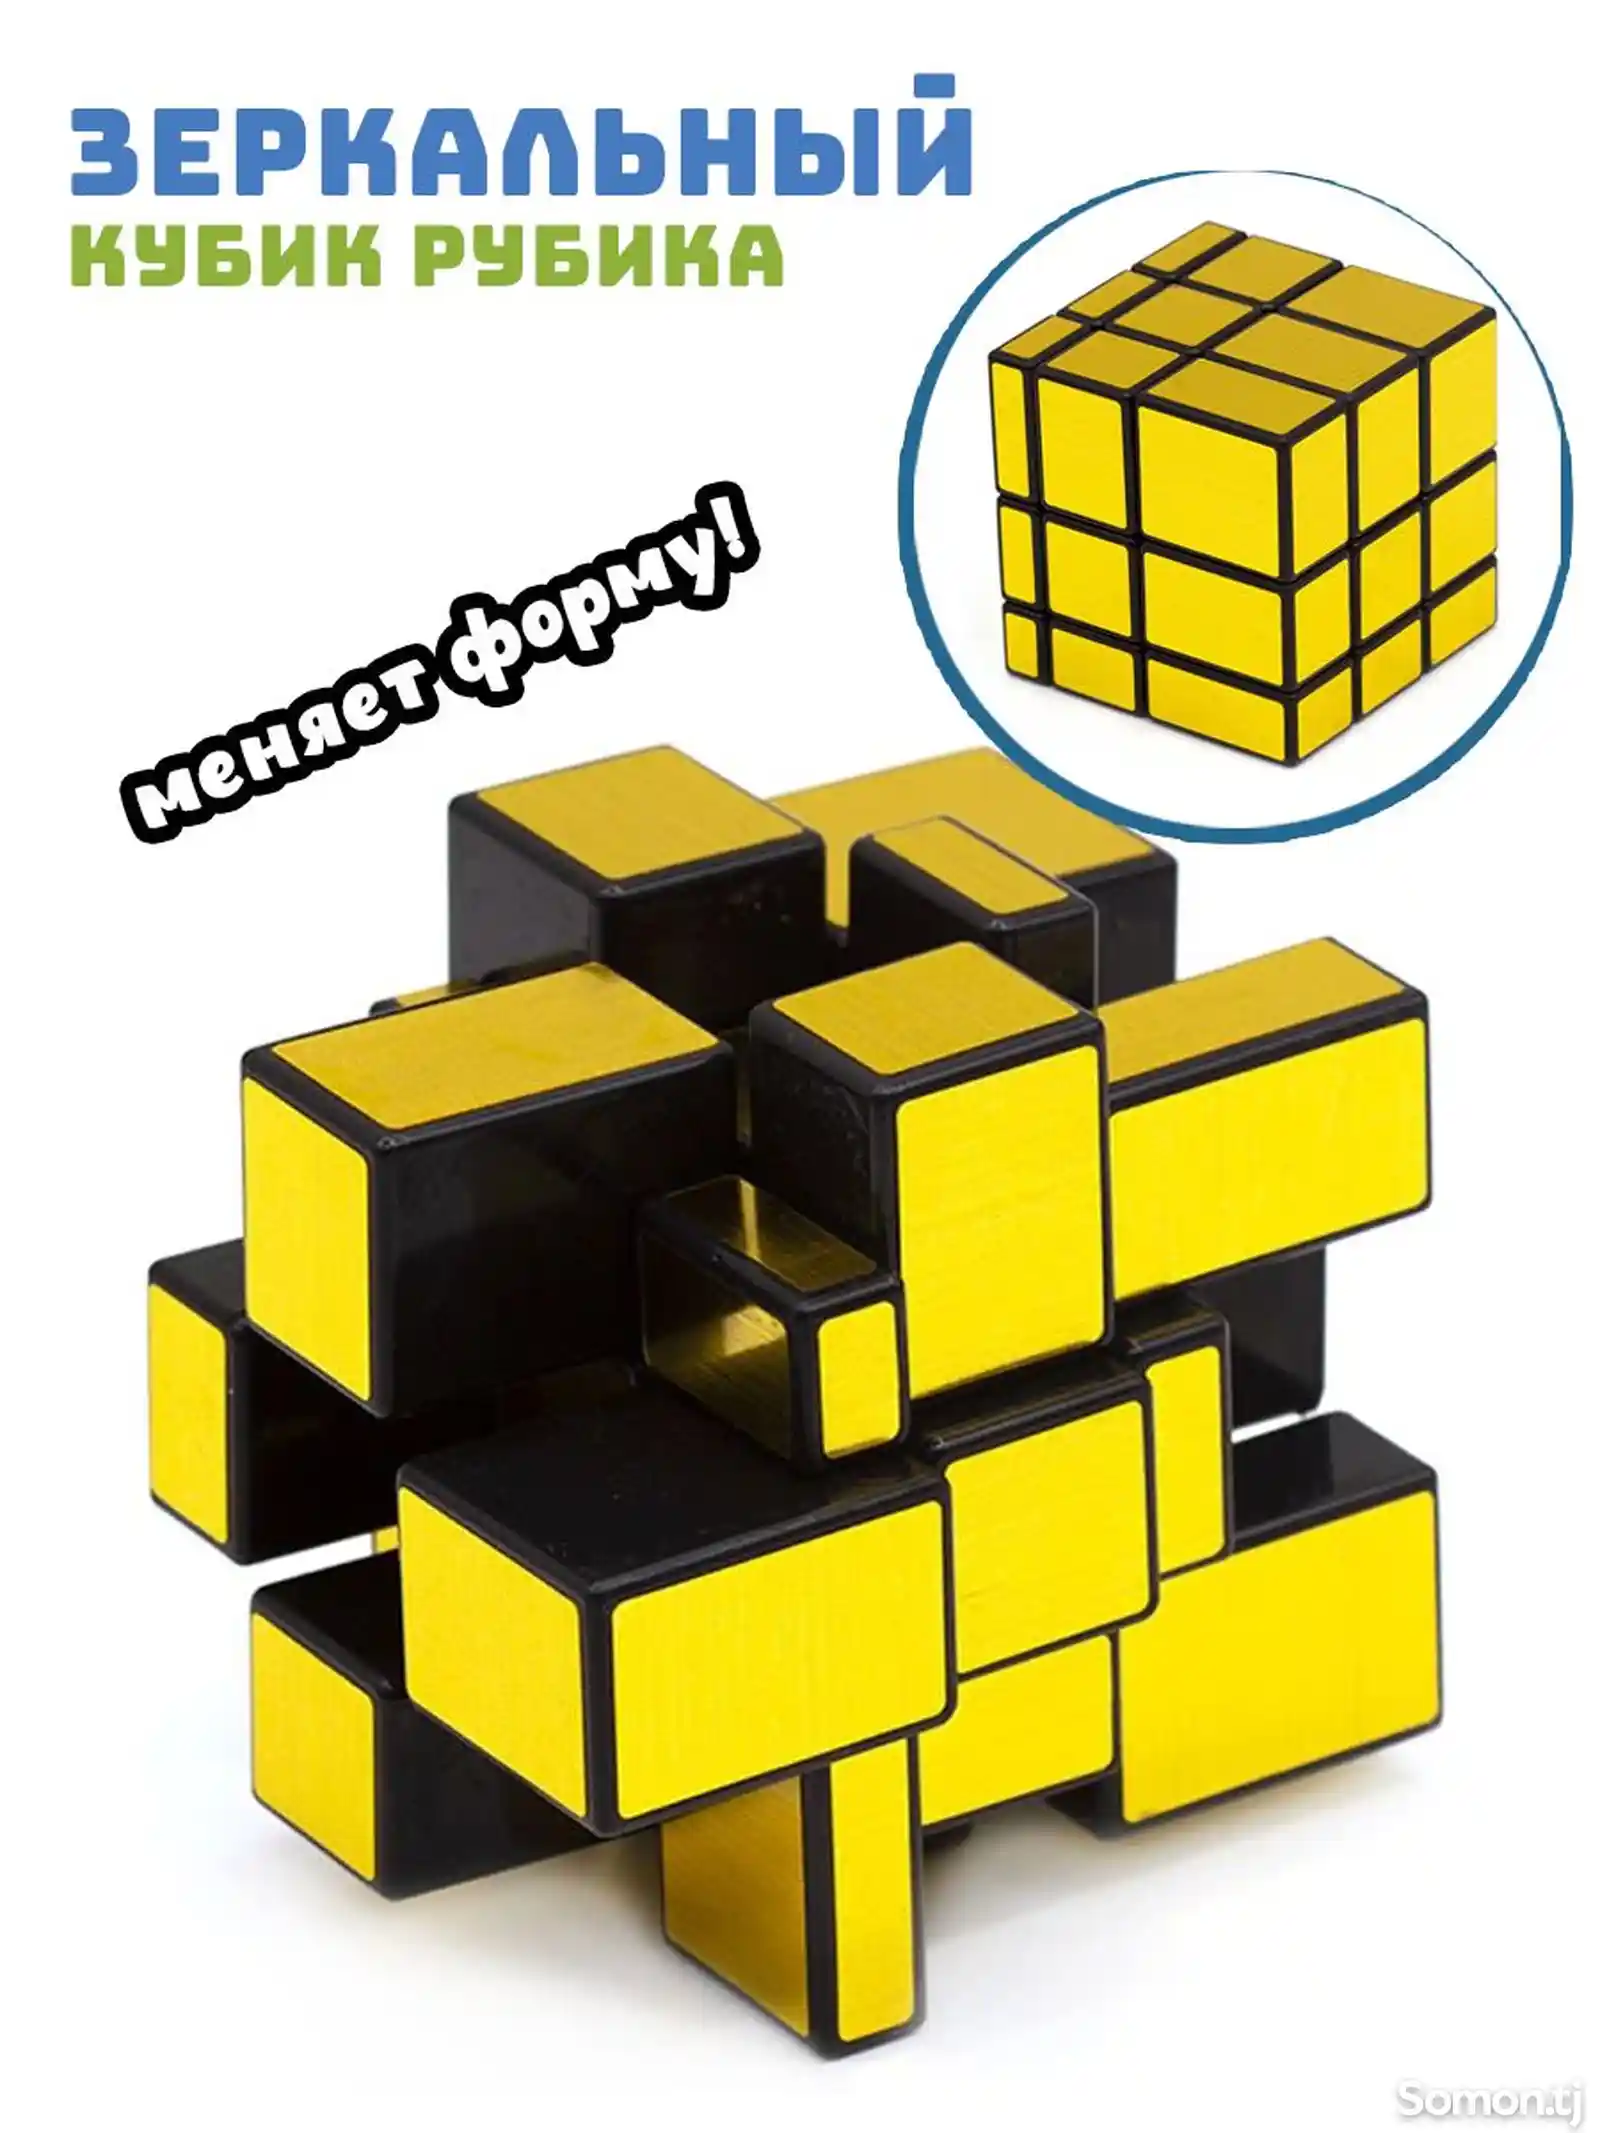 Зеркальный куб кубика Рубика, Mirror blocks cube 3x3x3-5